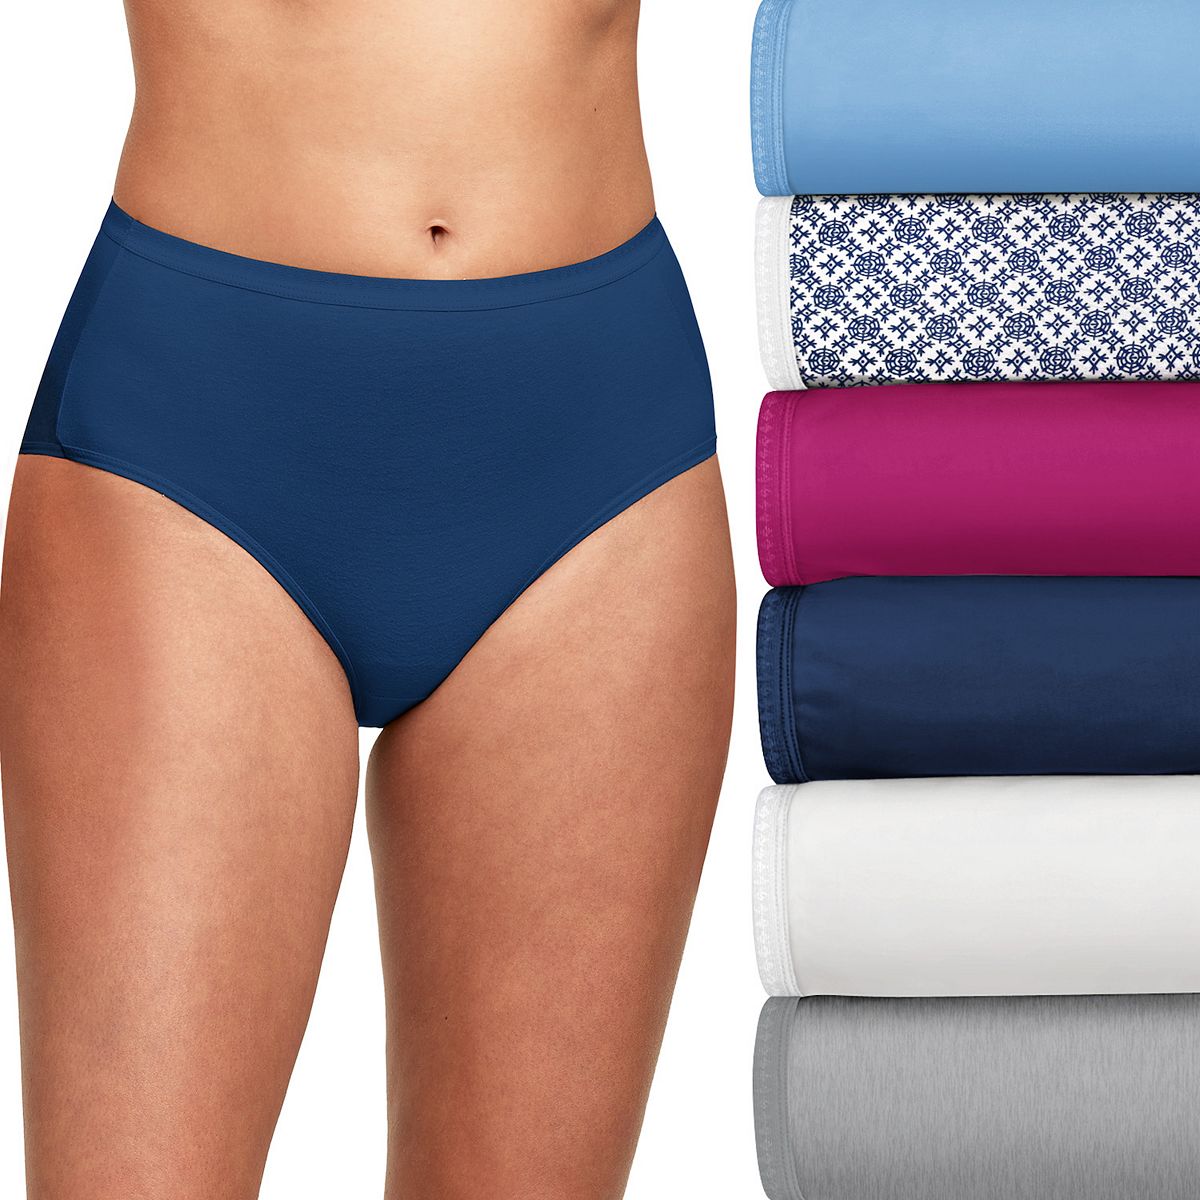 Hanes Women's Cotton Brief Underwear, Available in Regular and